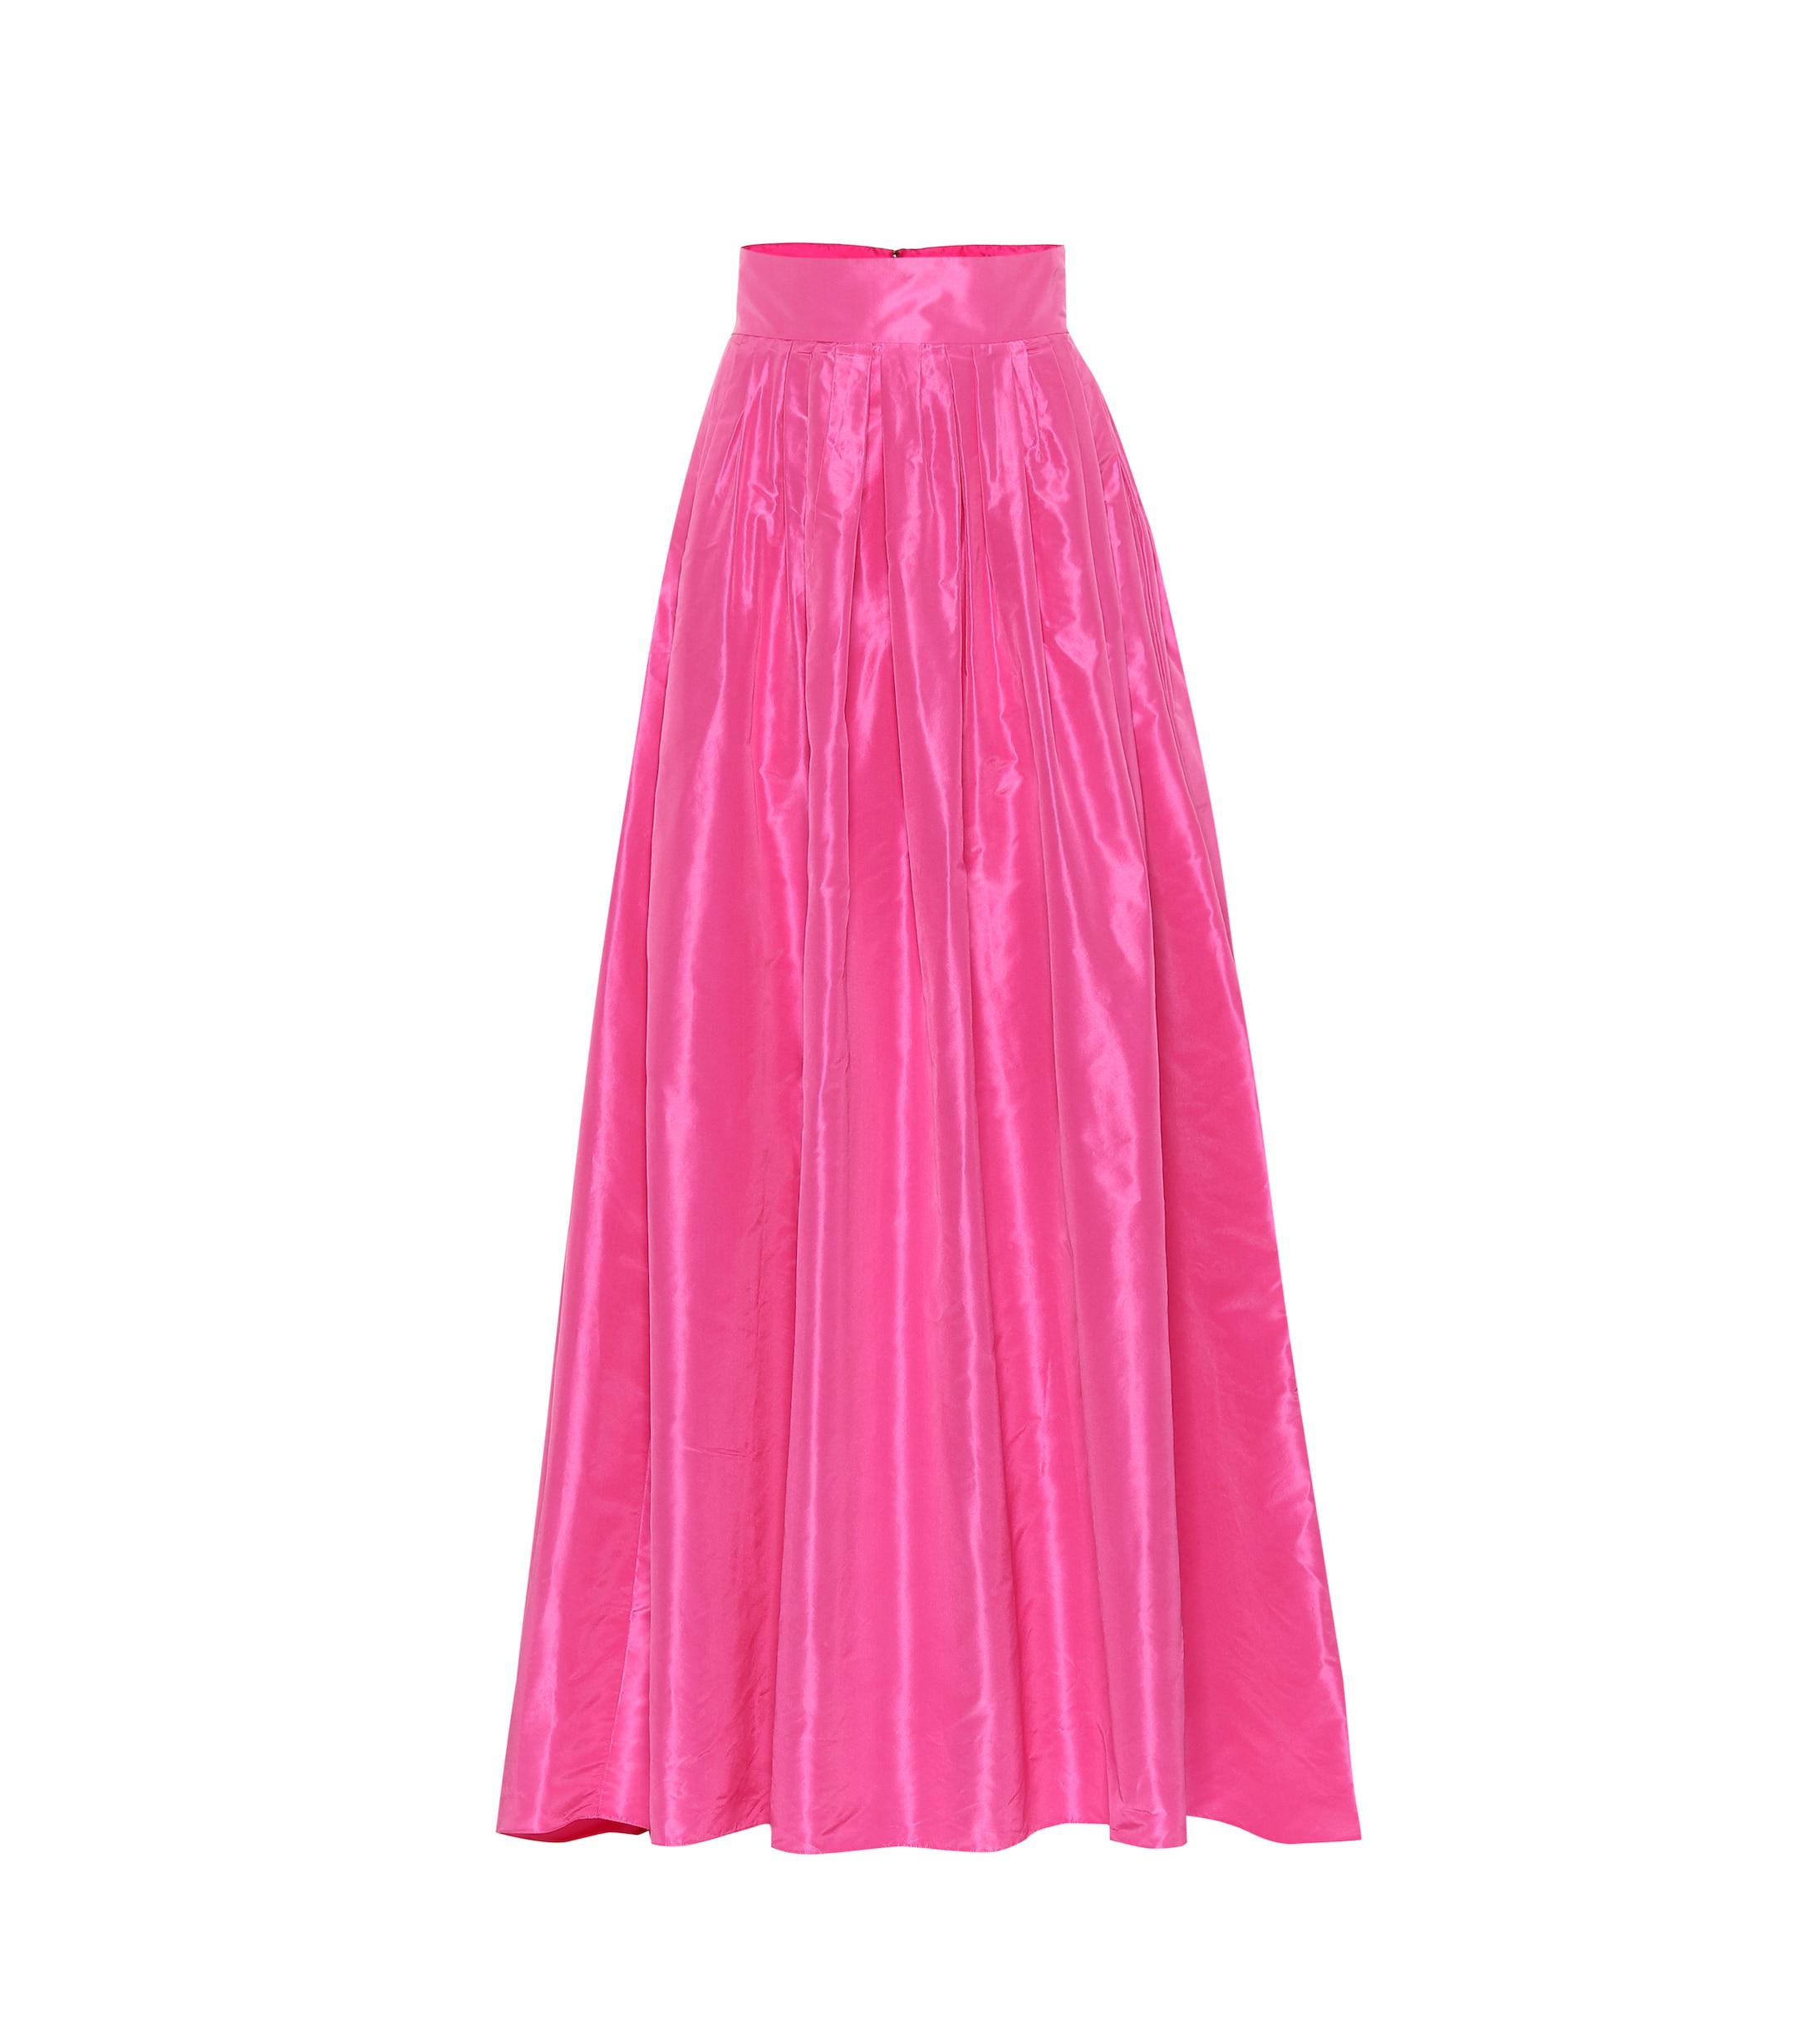 Lyst - Carolina Herrera High Rise Silk Taffeta Ball Gown Skirt in Pink ...